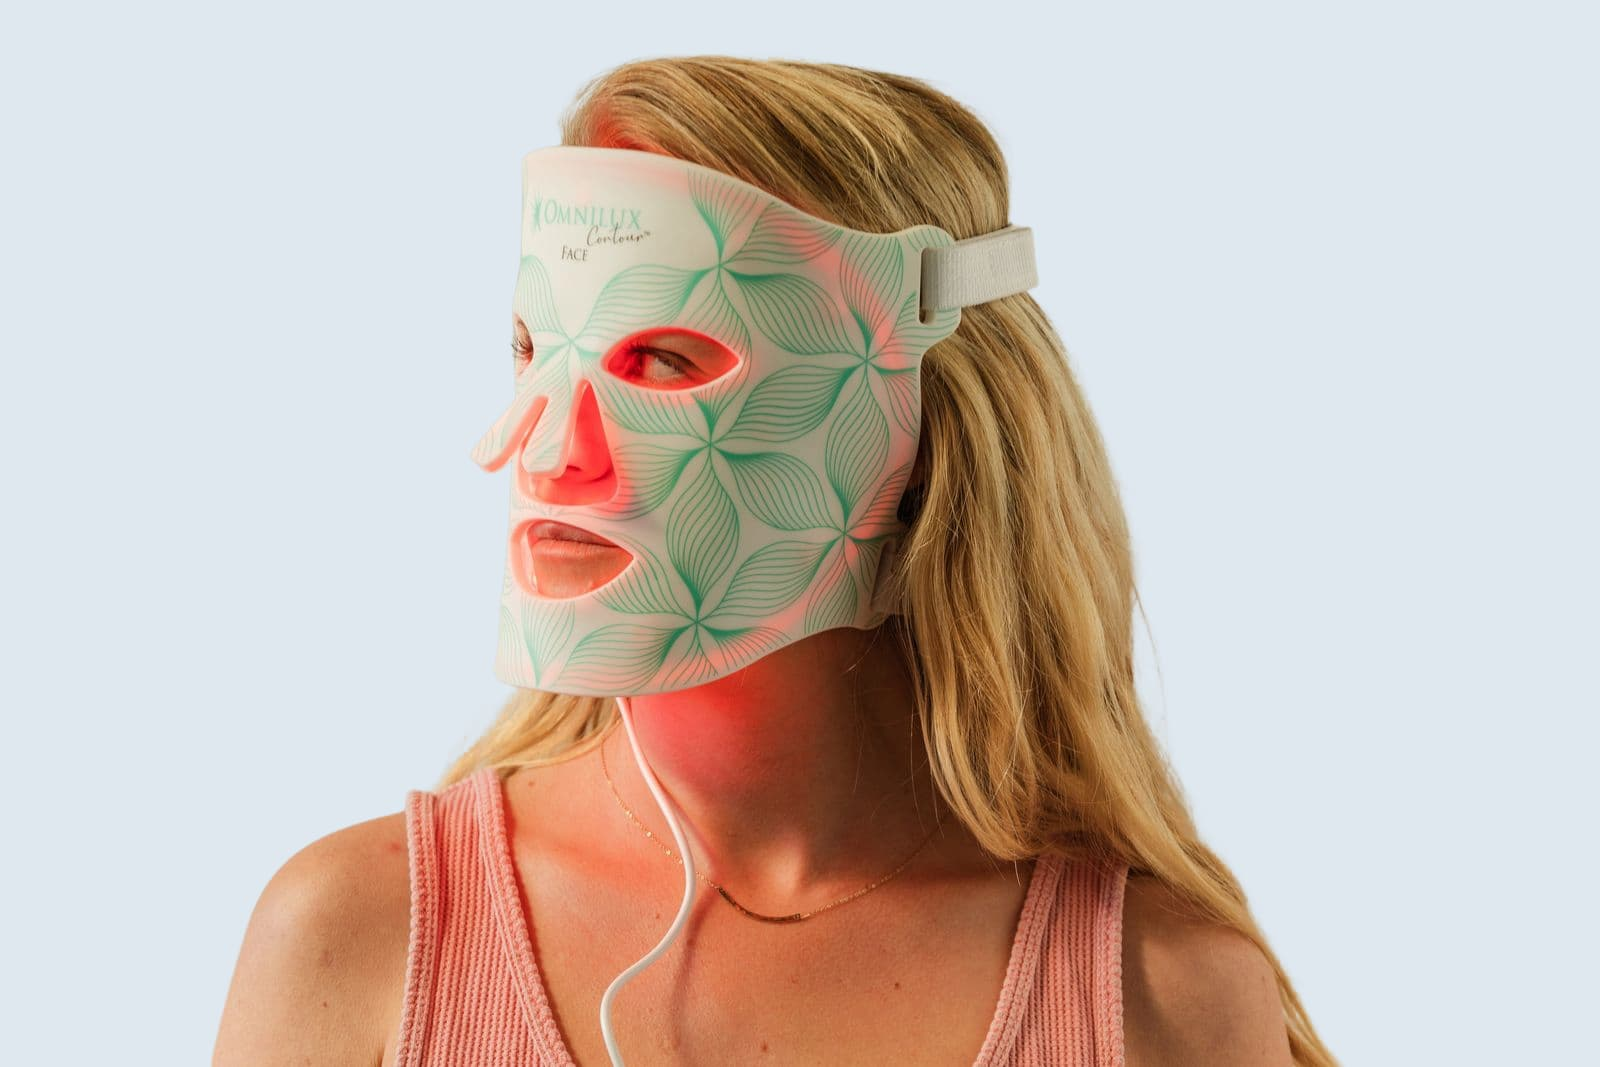 The Omnilux Contour Mask utilises adjustable velcro straps for a comfortable treatment cycle